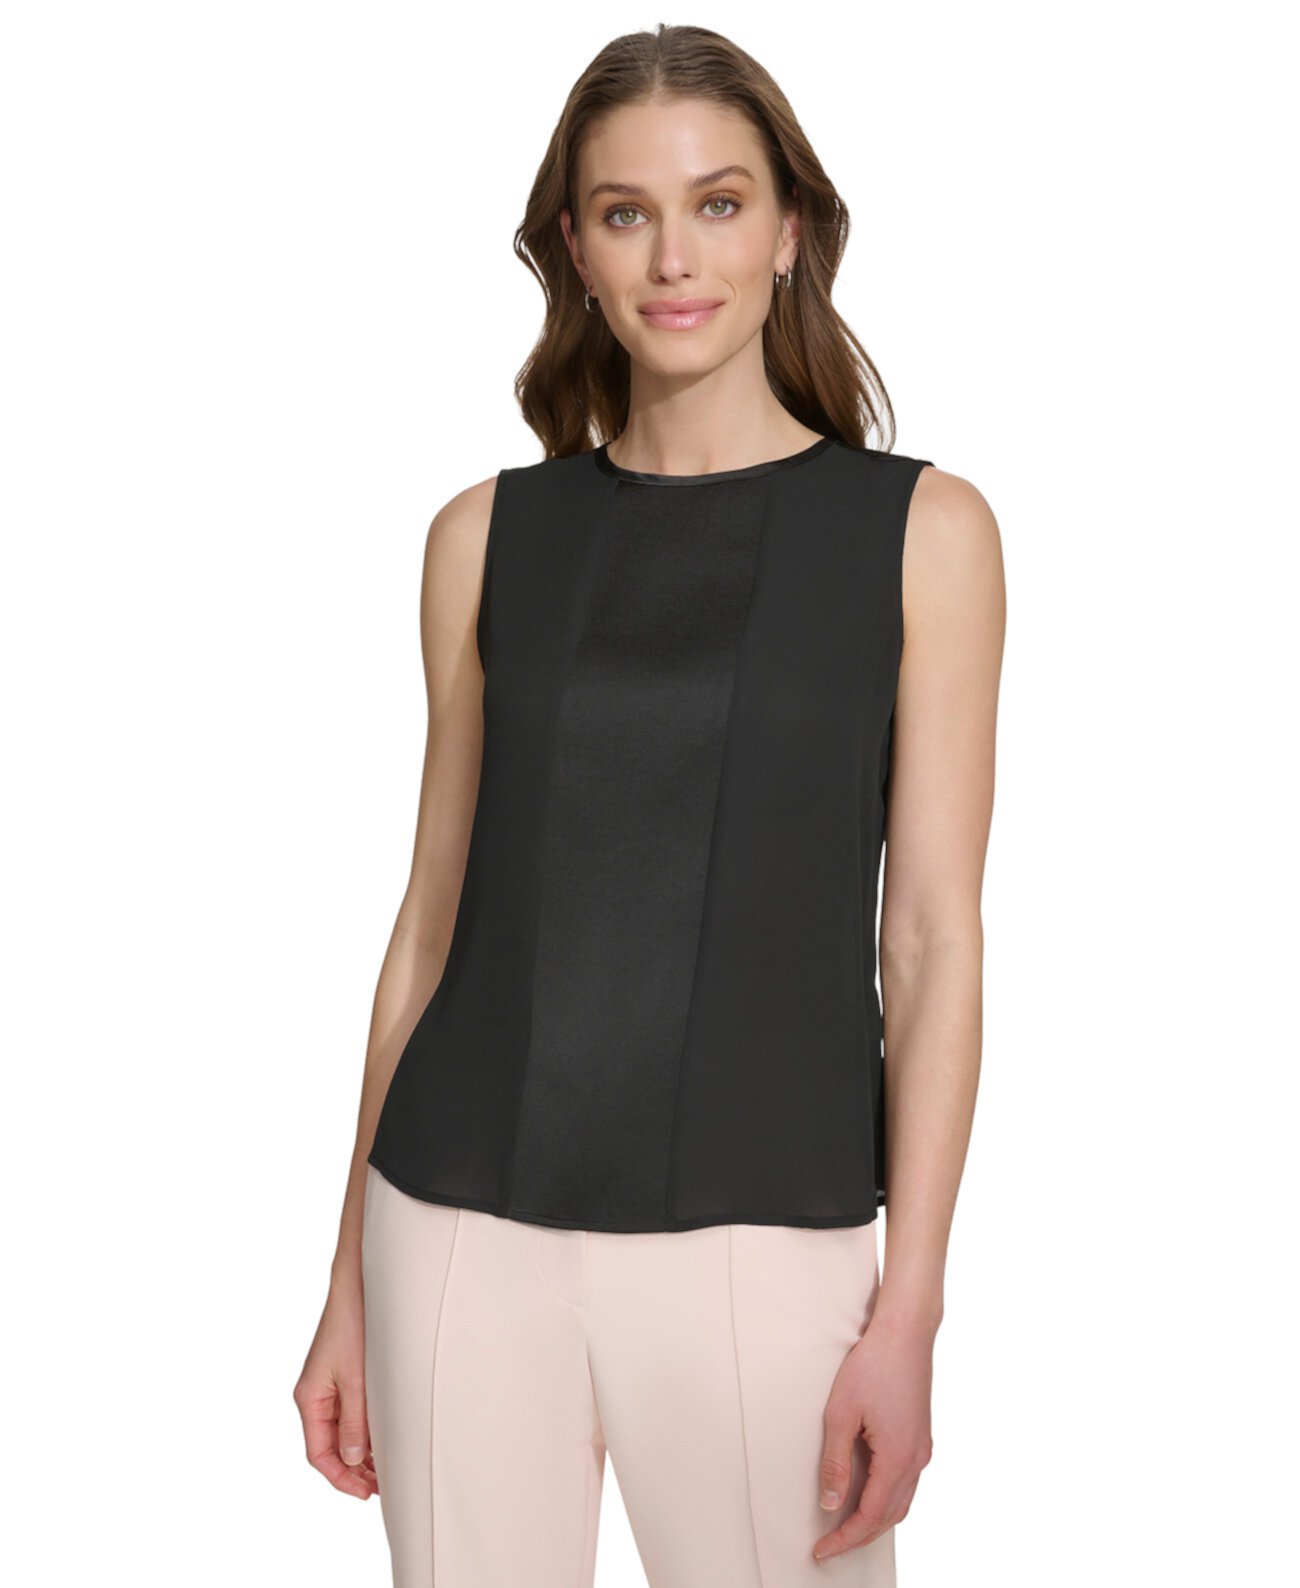 Женская блузка без рукавов с круглым вырезом, смешанная техника DKNY